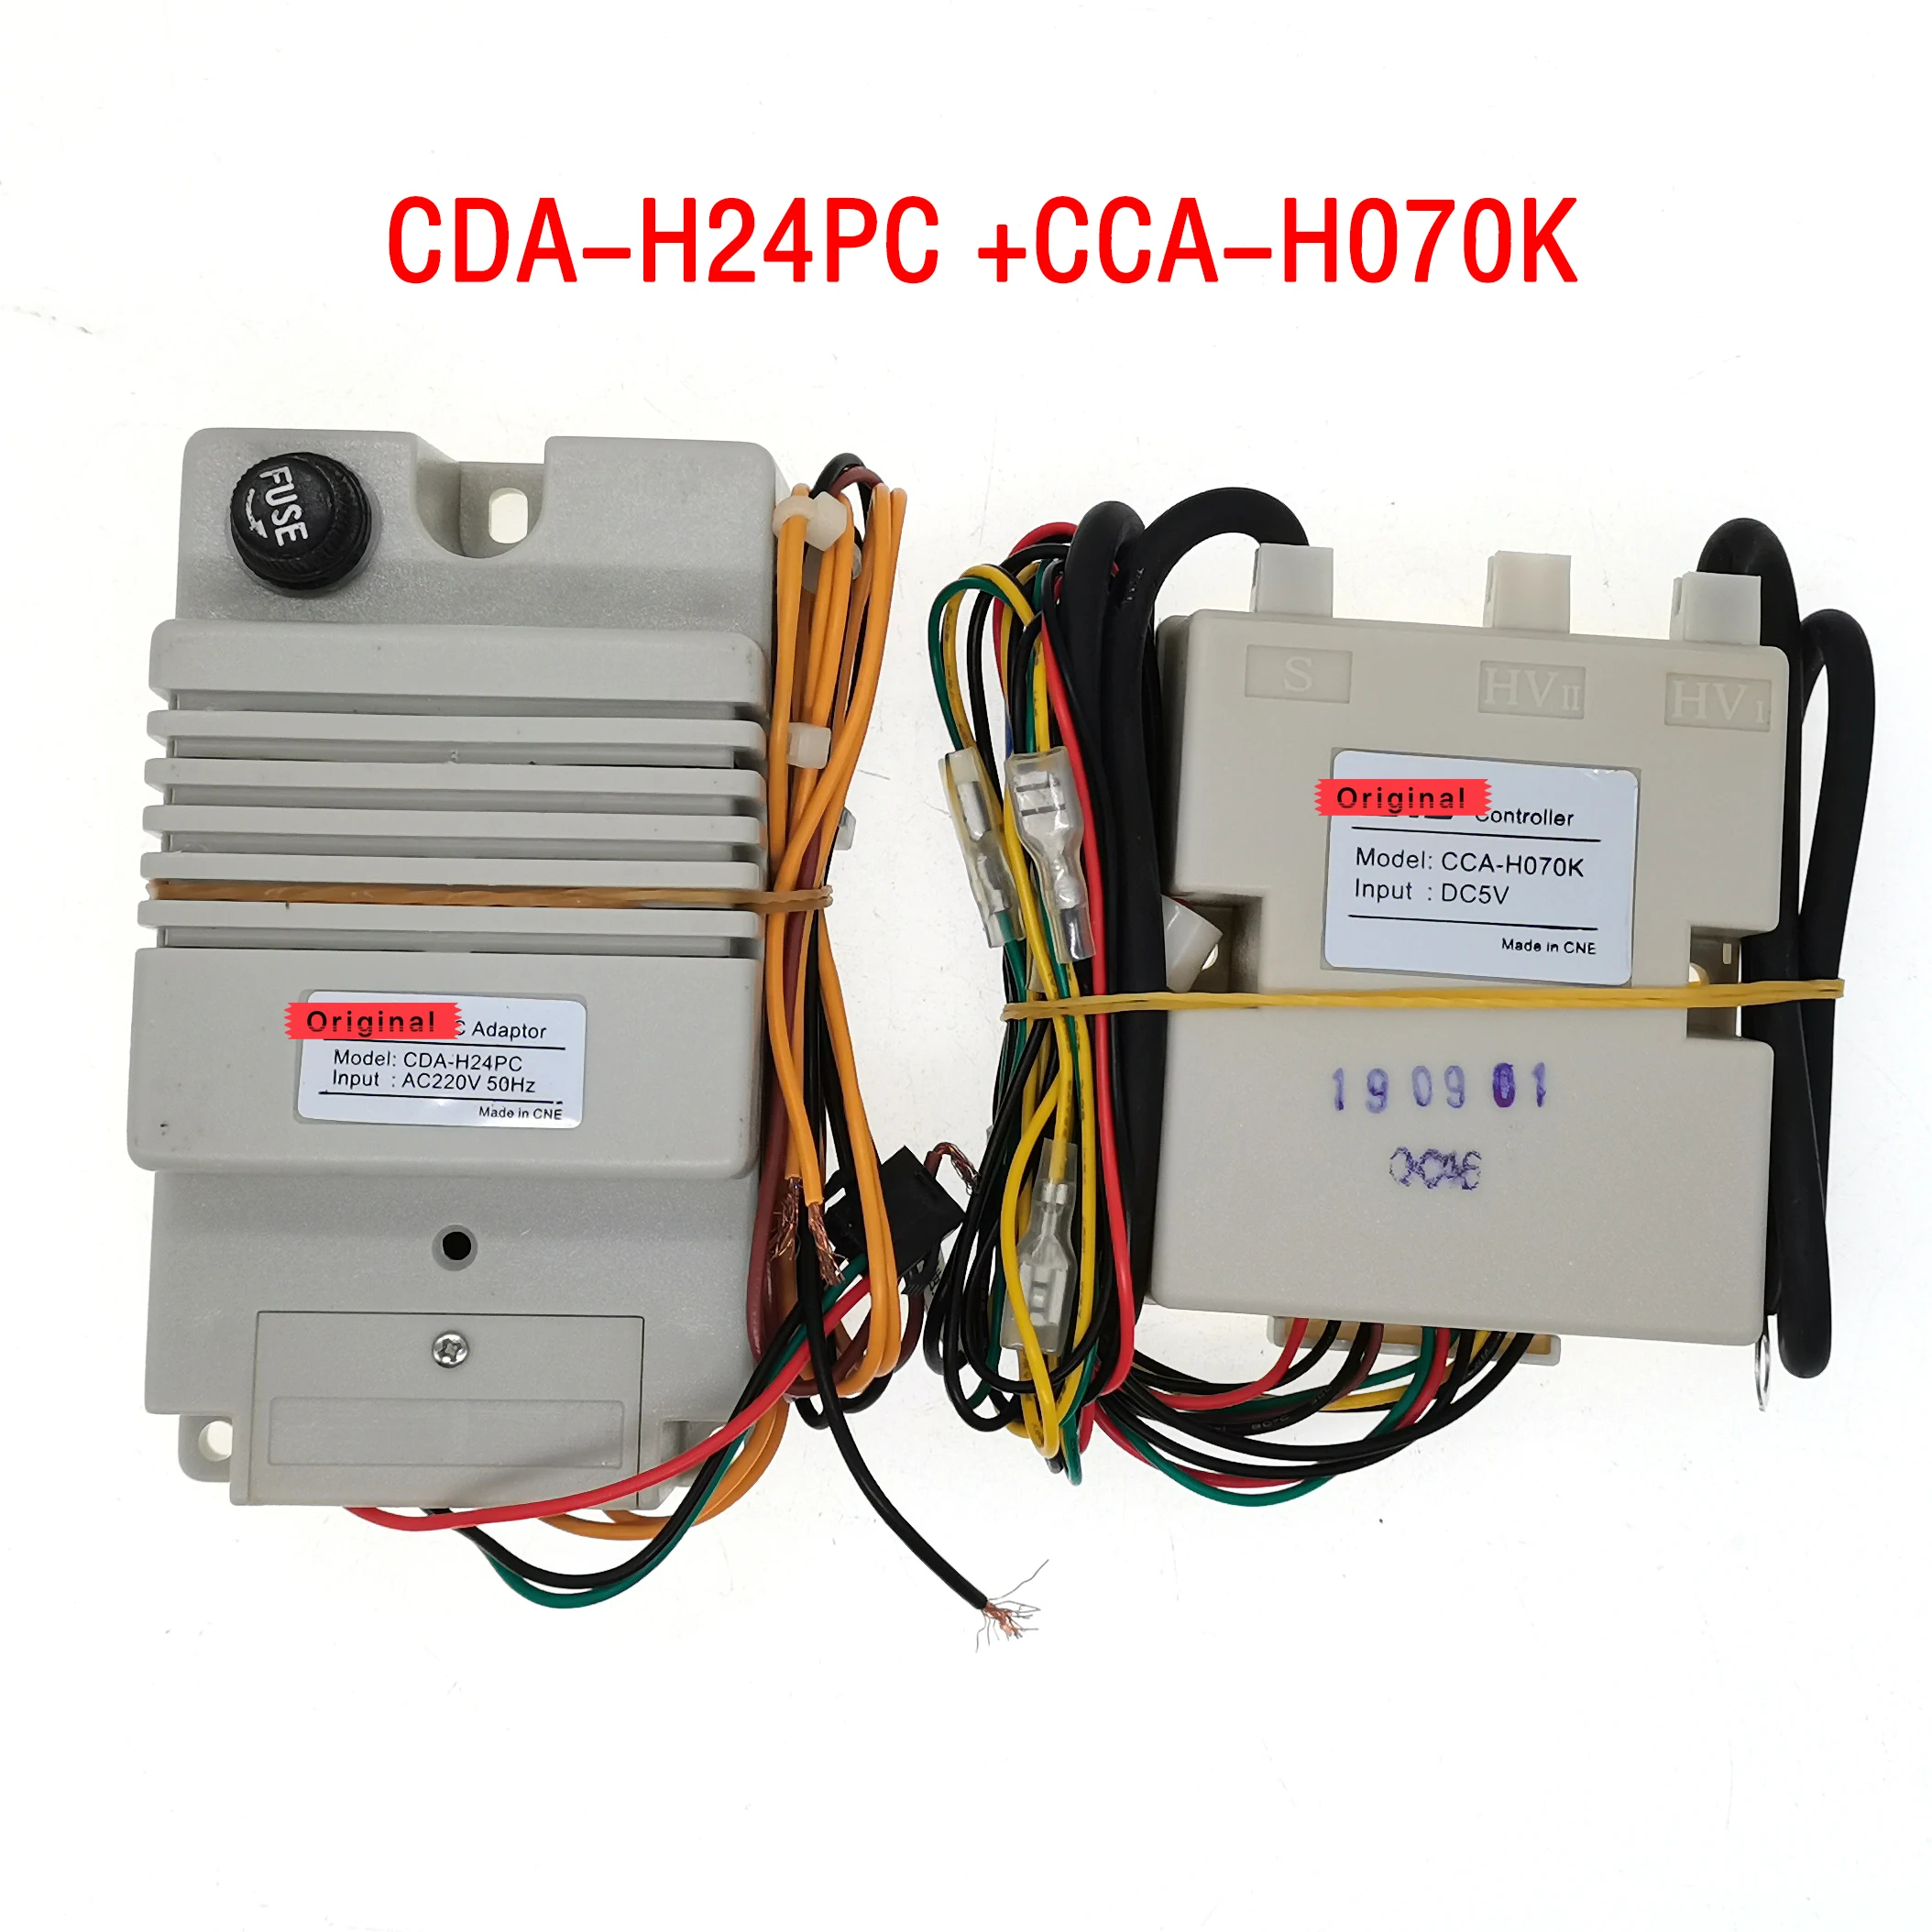 A set of CDA-H24PC power box CCA-H070K universal gas oven igniter